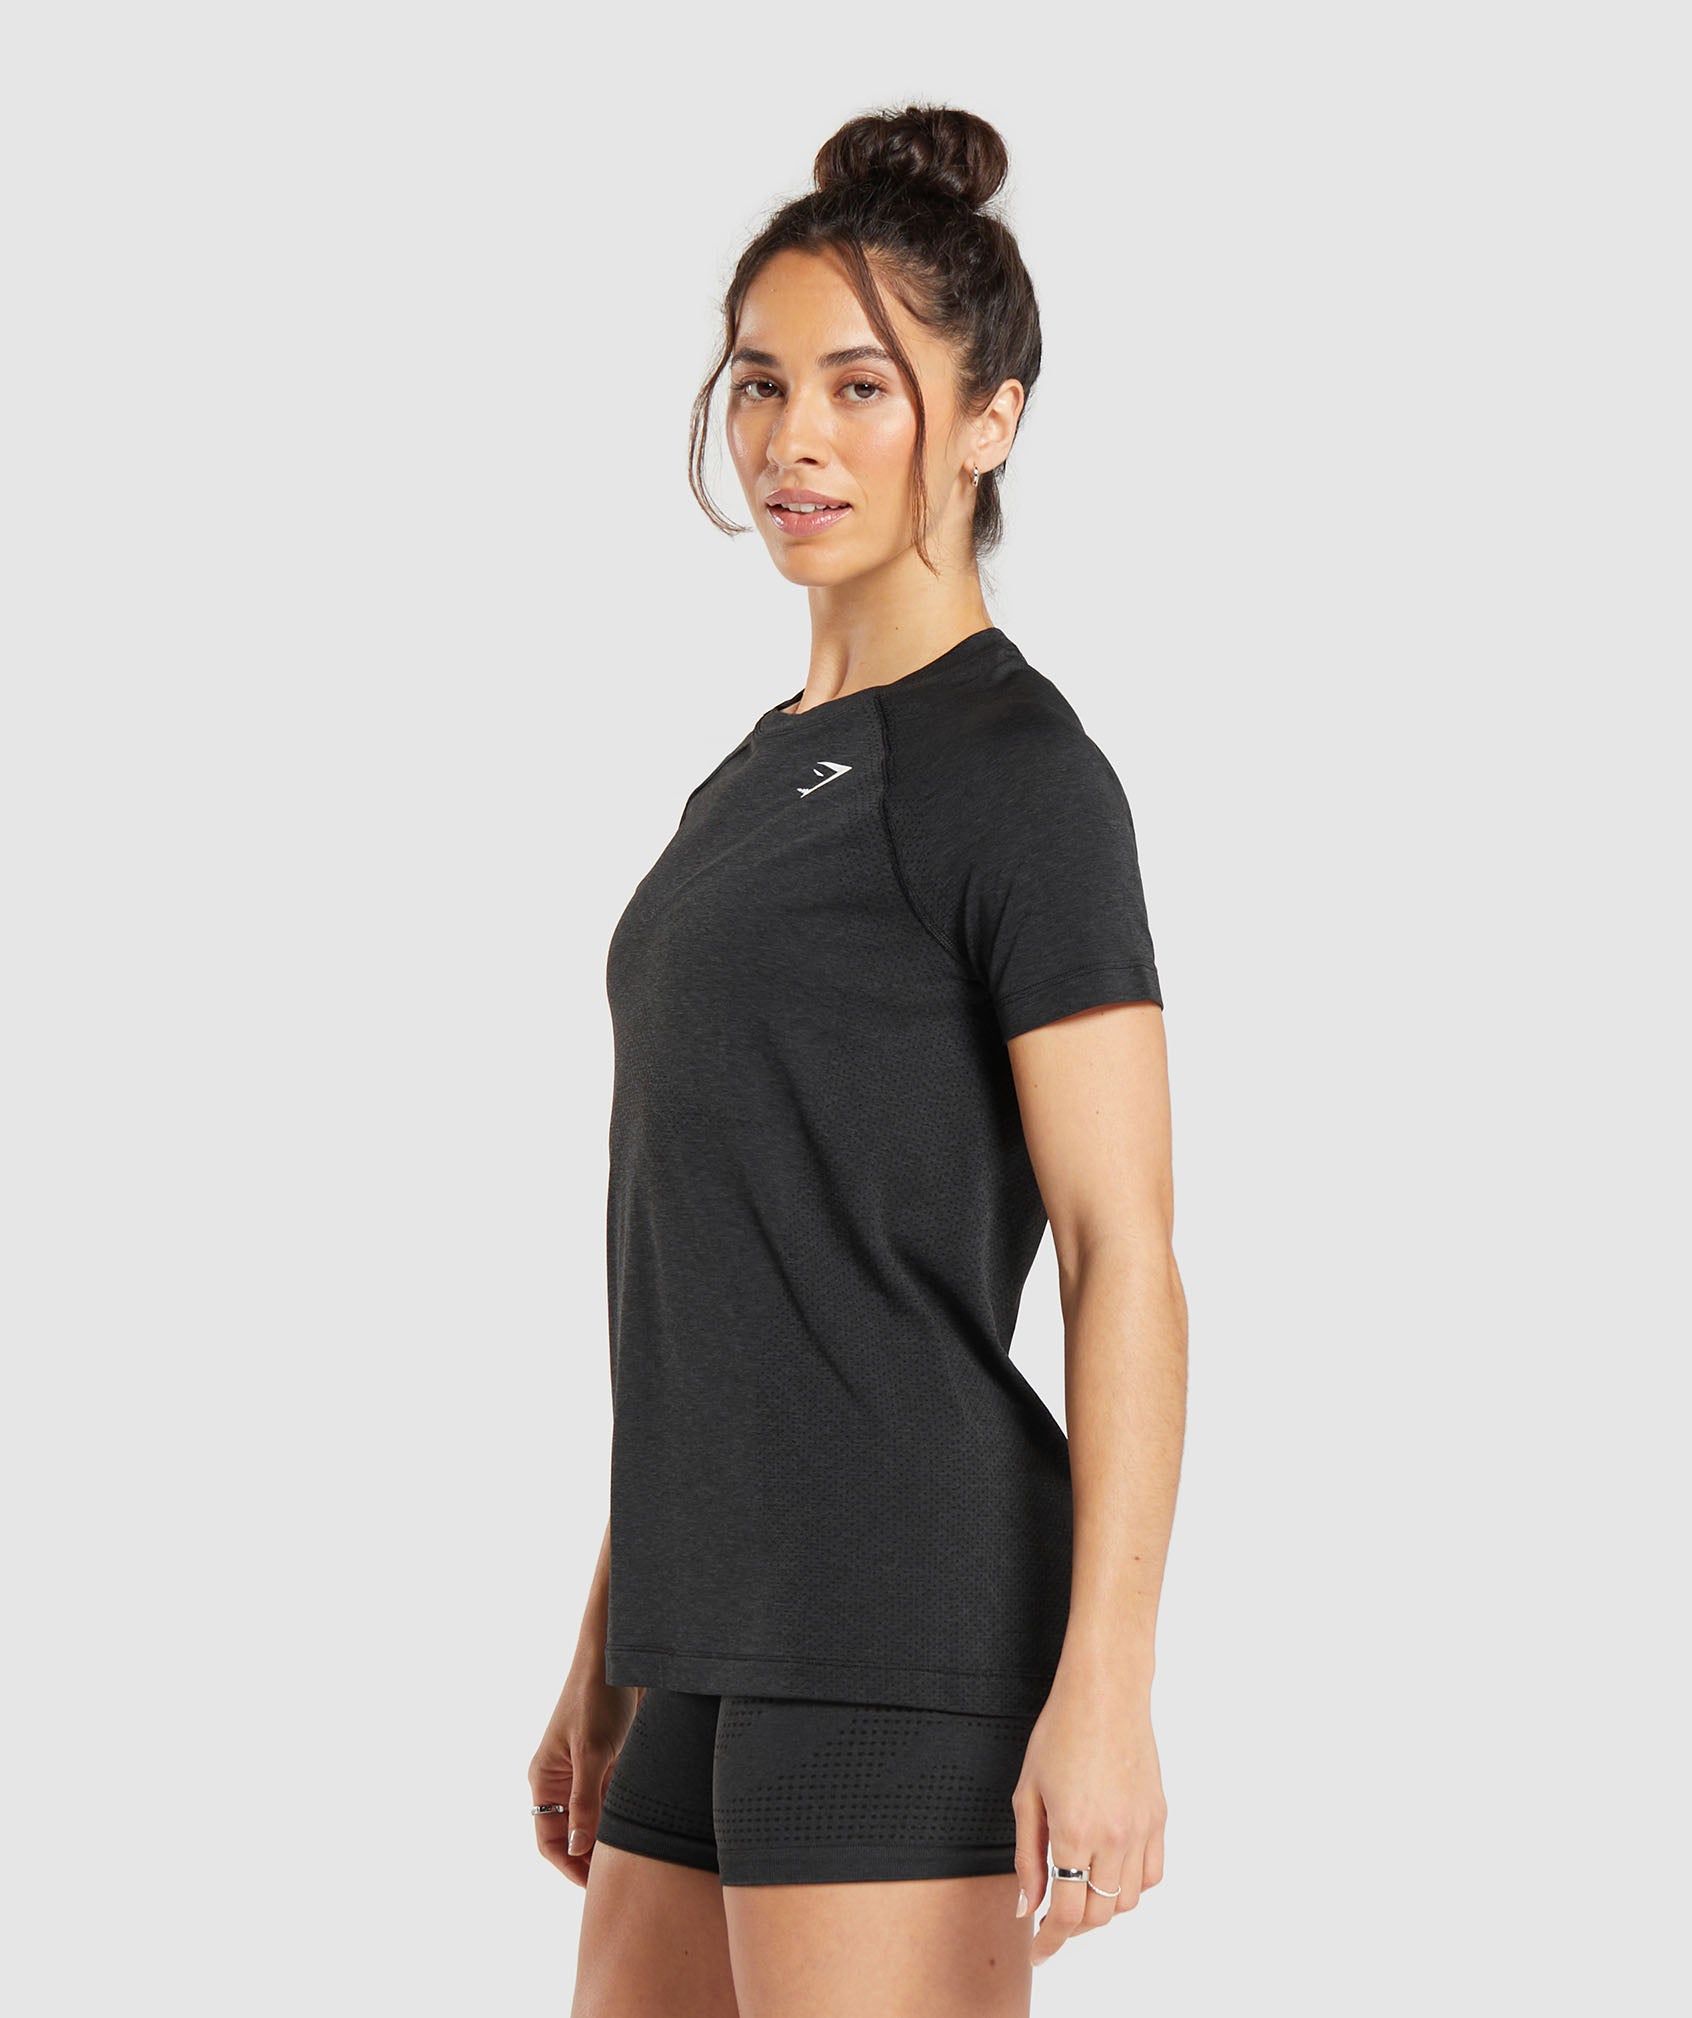 Vital Seamless 2.0 Light T-Shirt in Black Marl